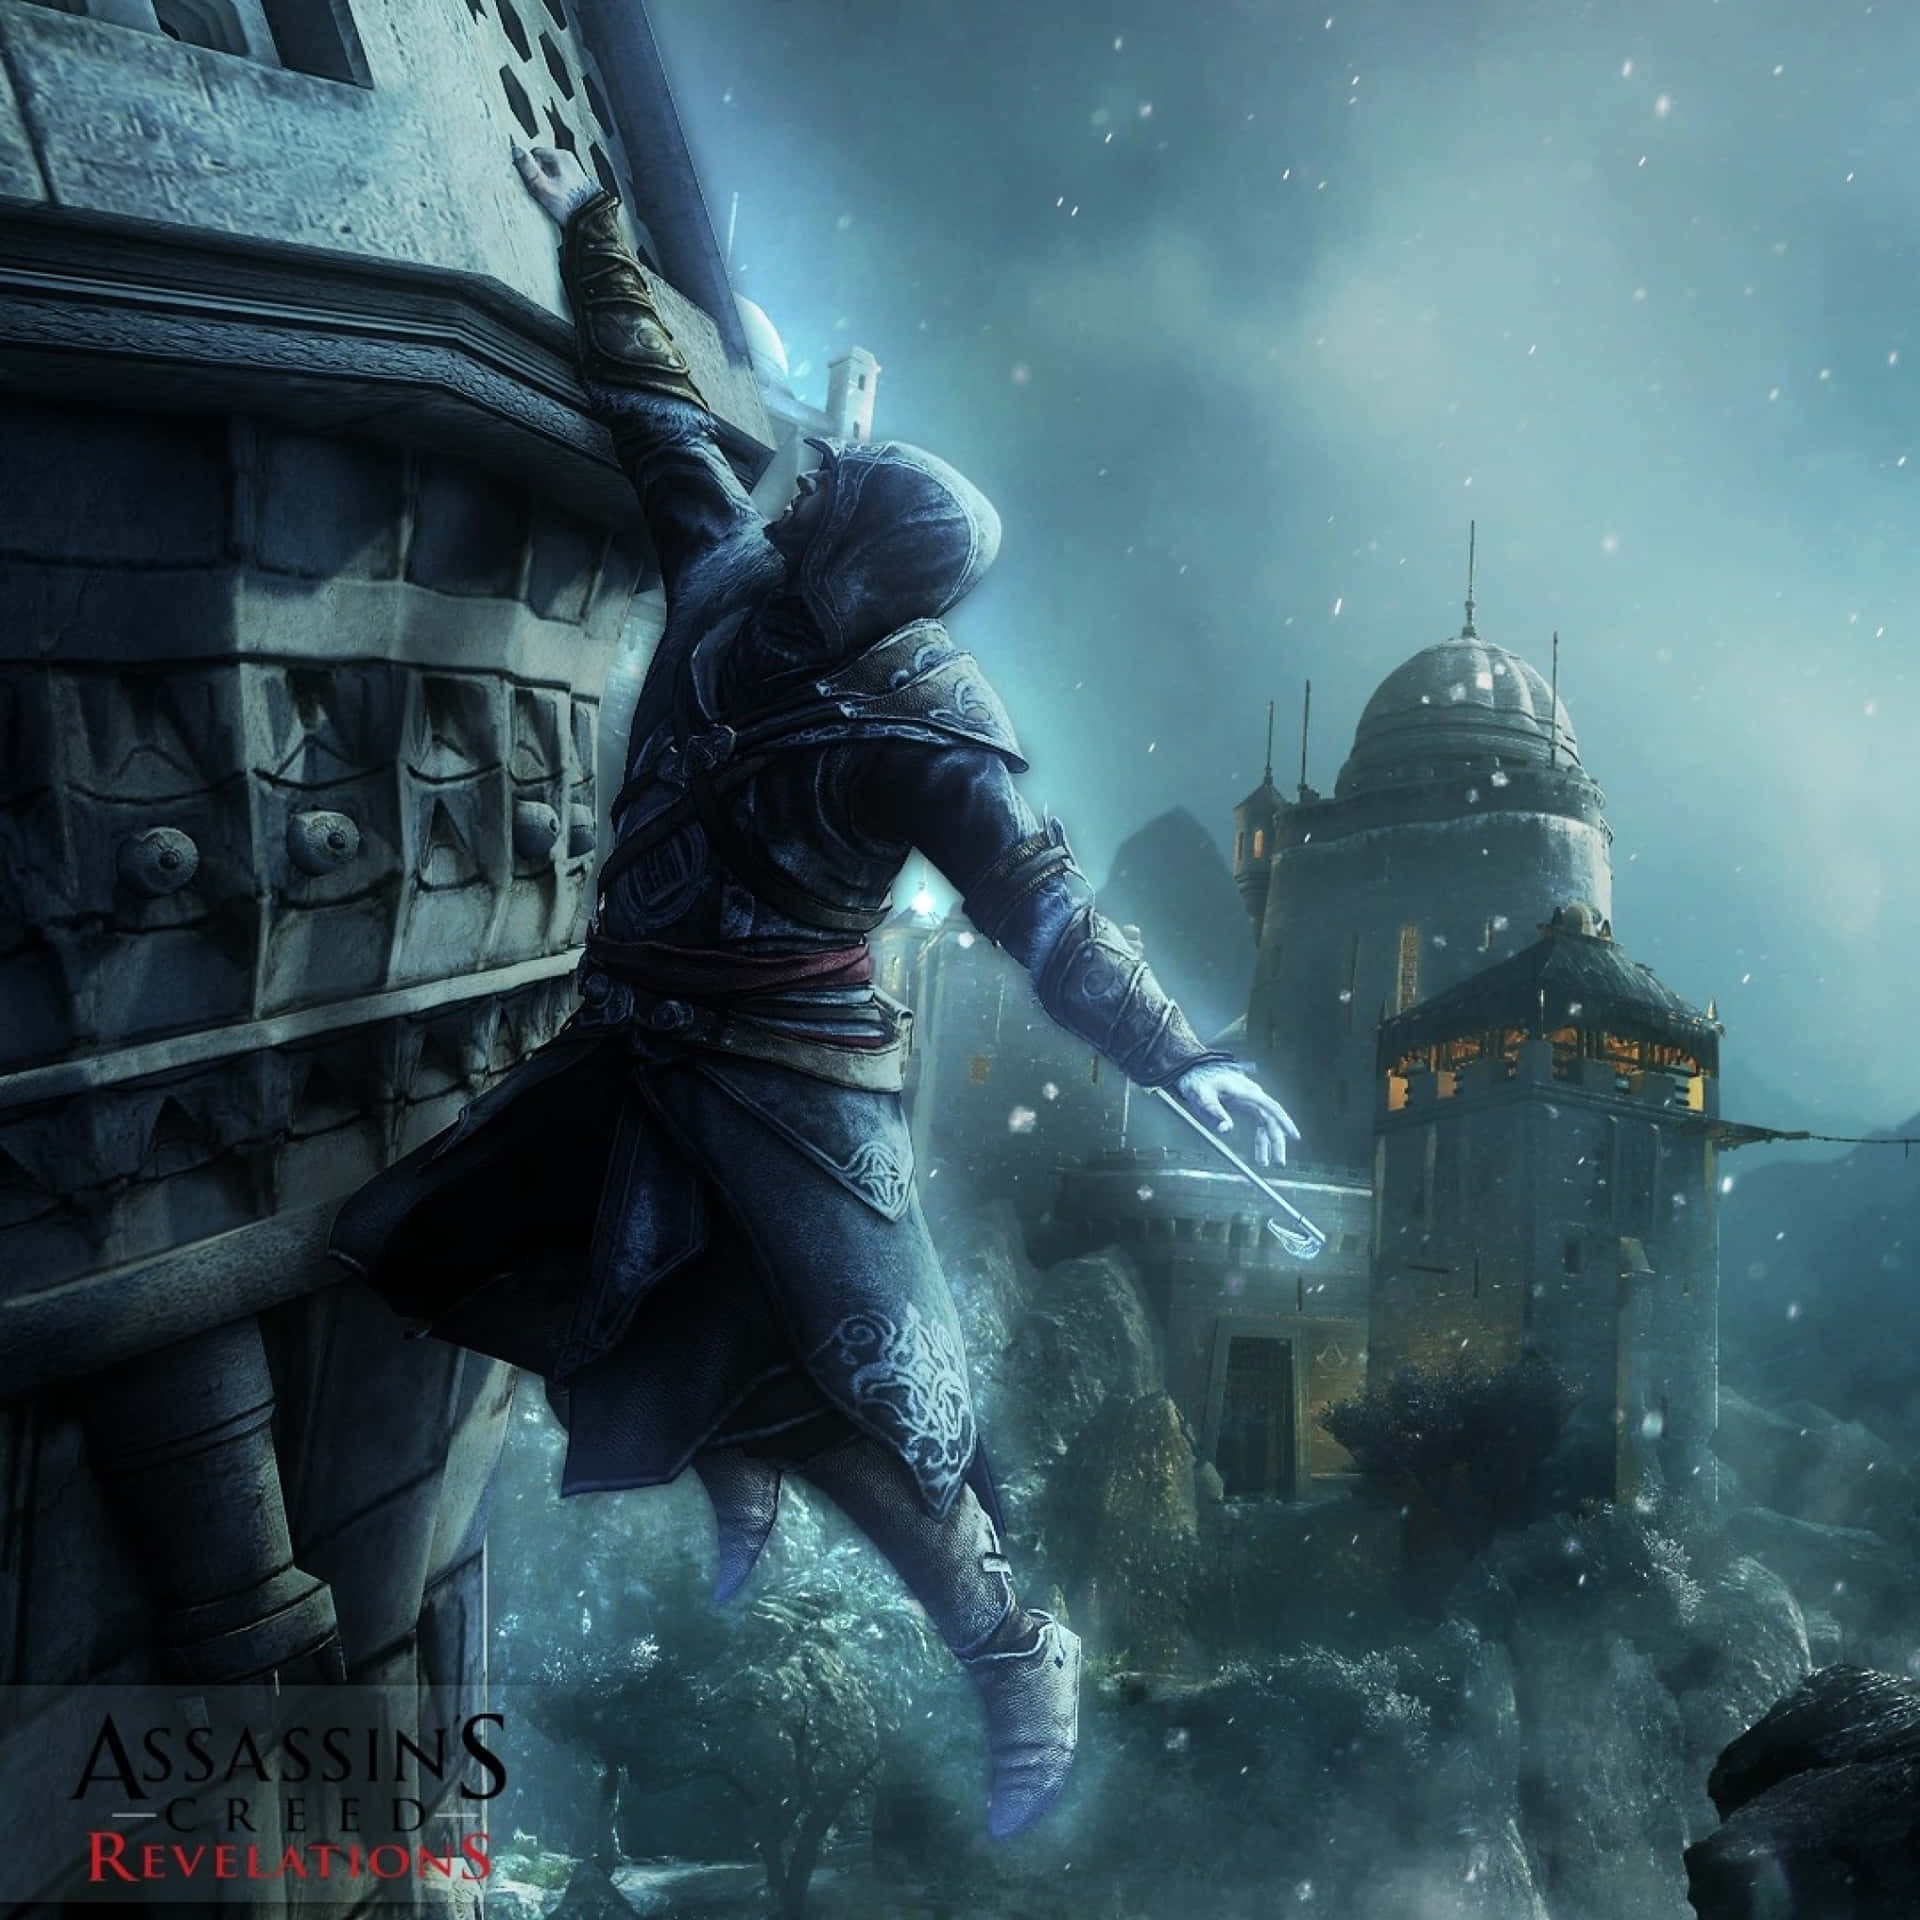 Captivating Desmond Miles - Assassin's Creed Hero Wallpaper